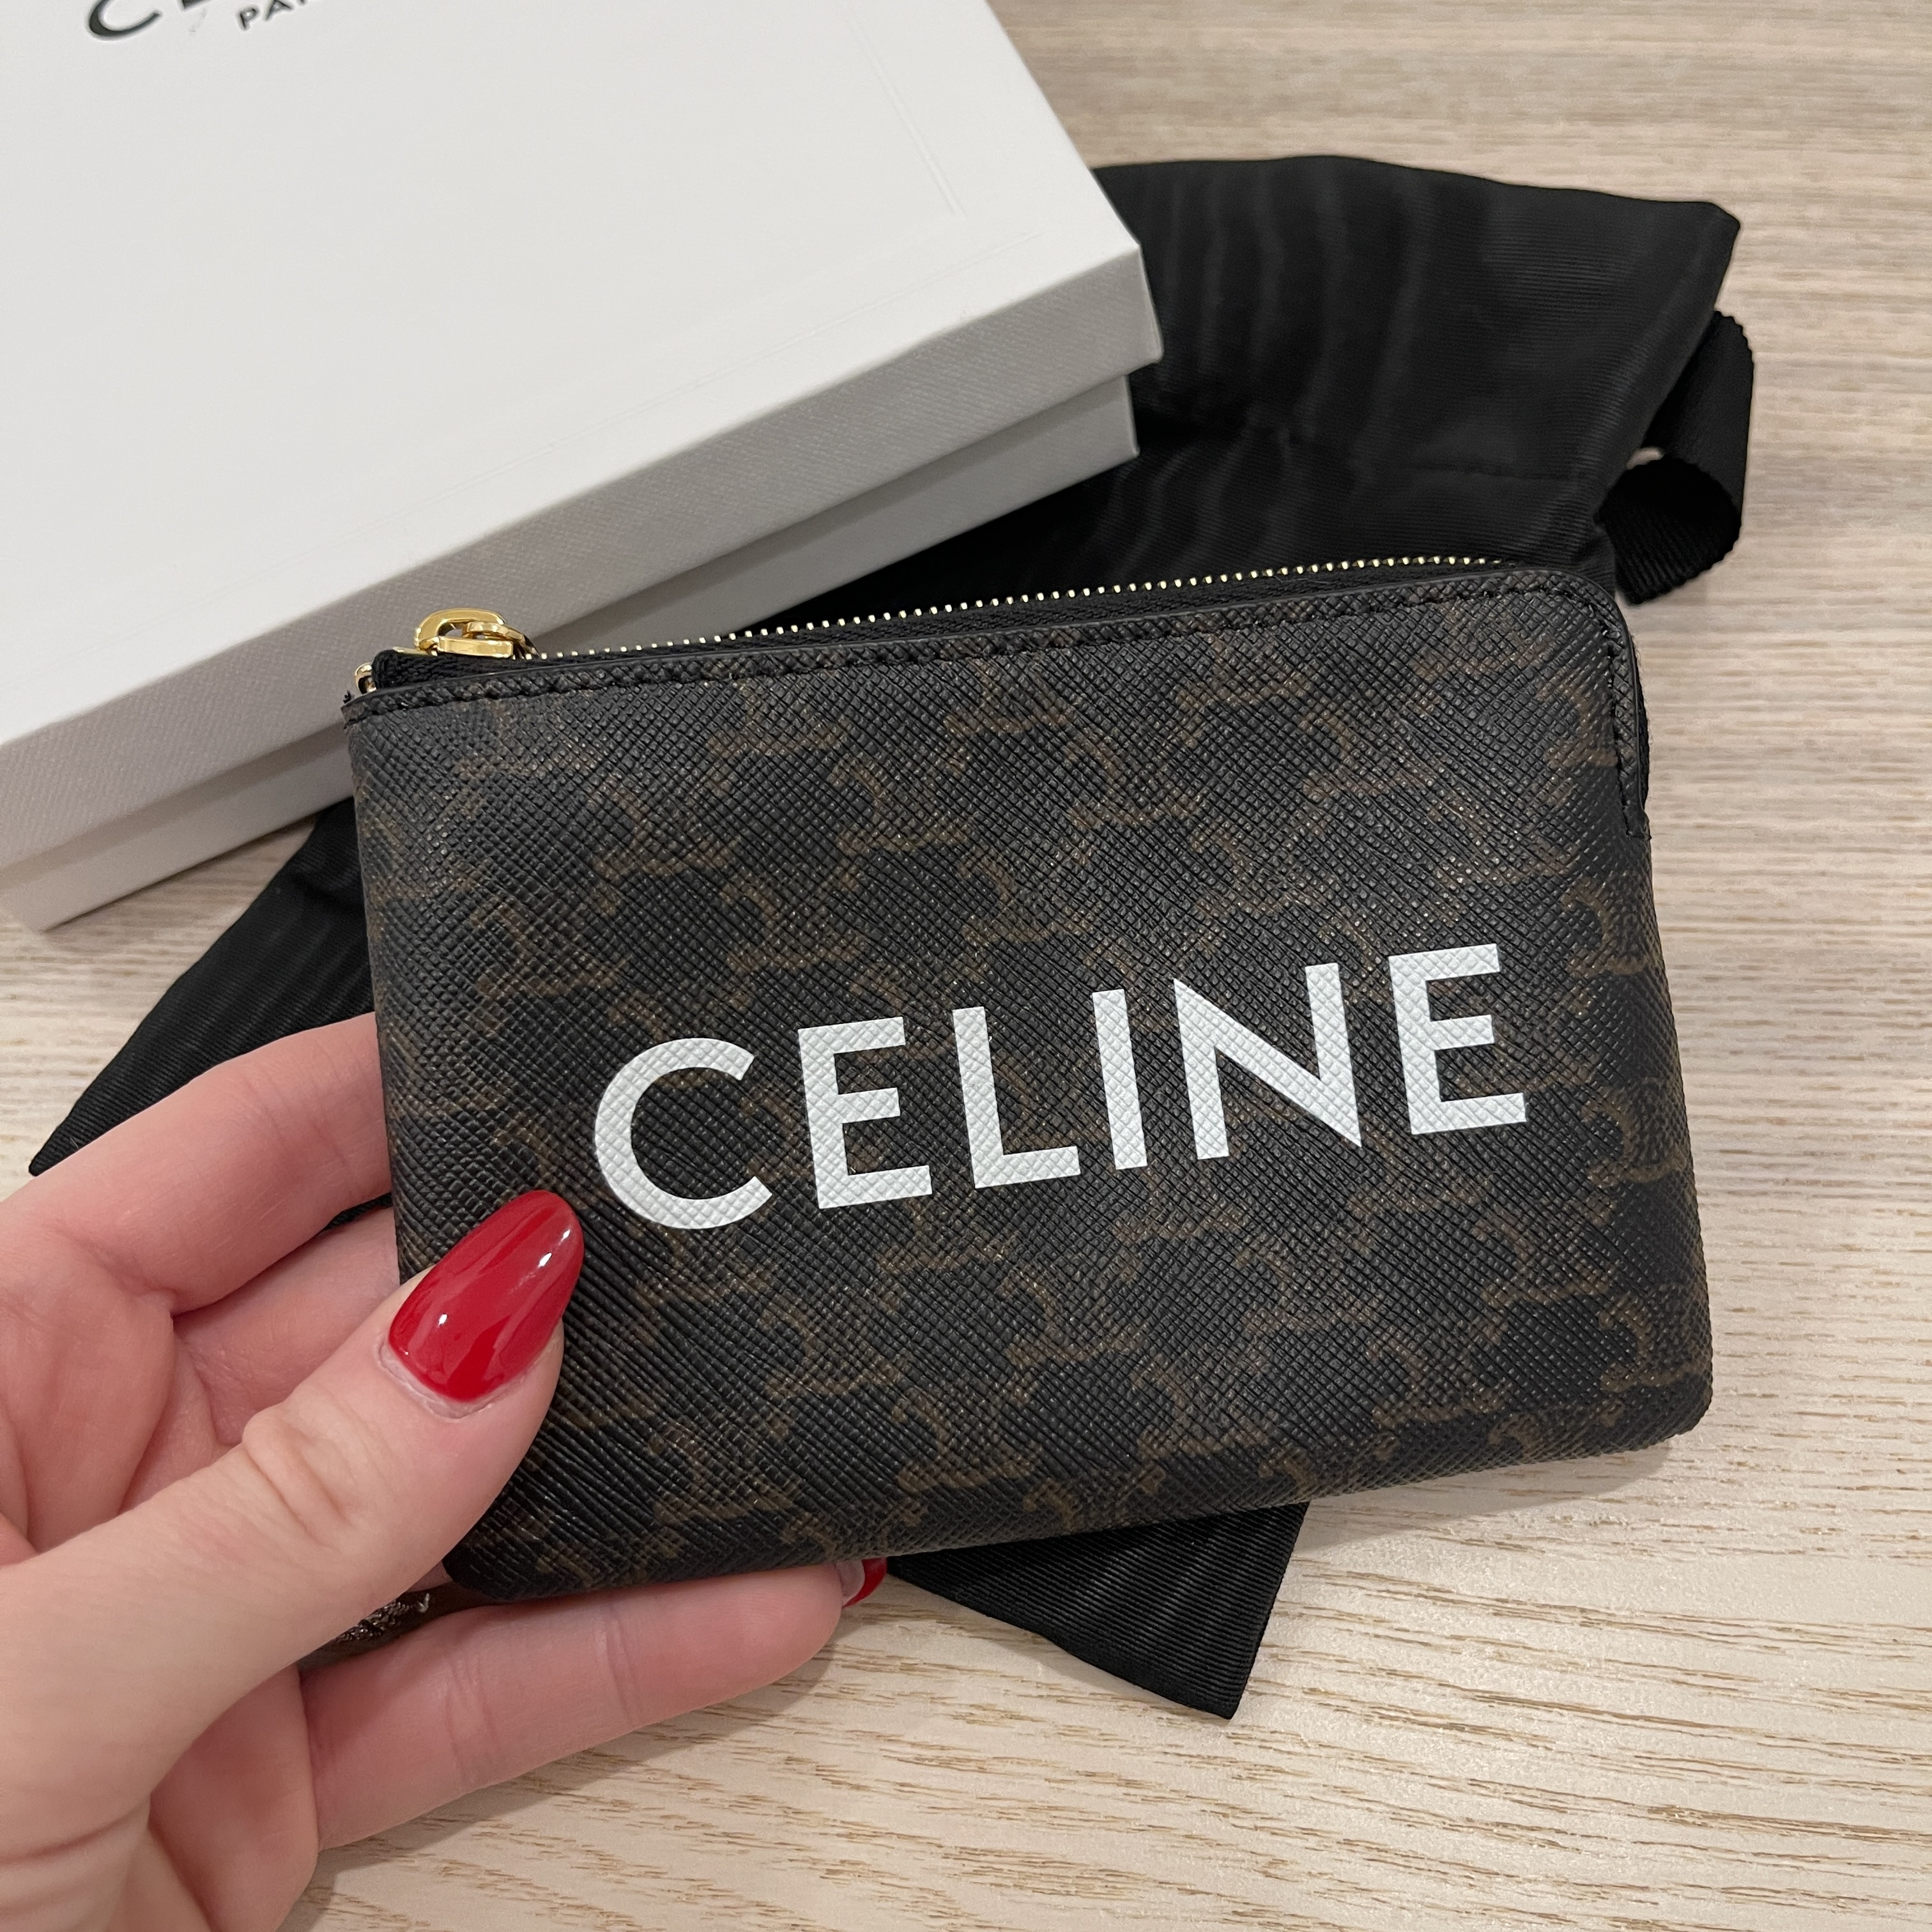 Authentic Celine Triomphe Canvas Coins & Card Pouch, Luxury, Bags